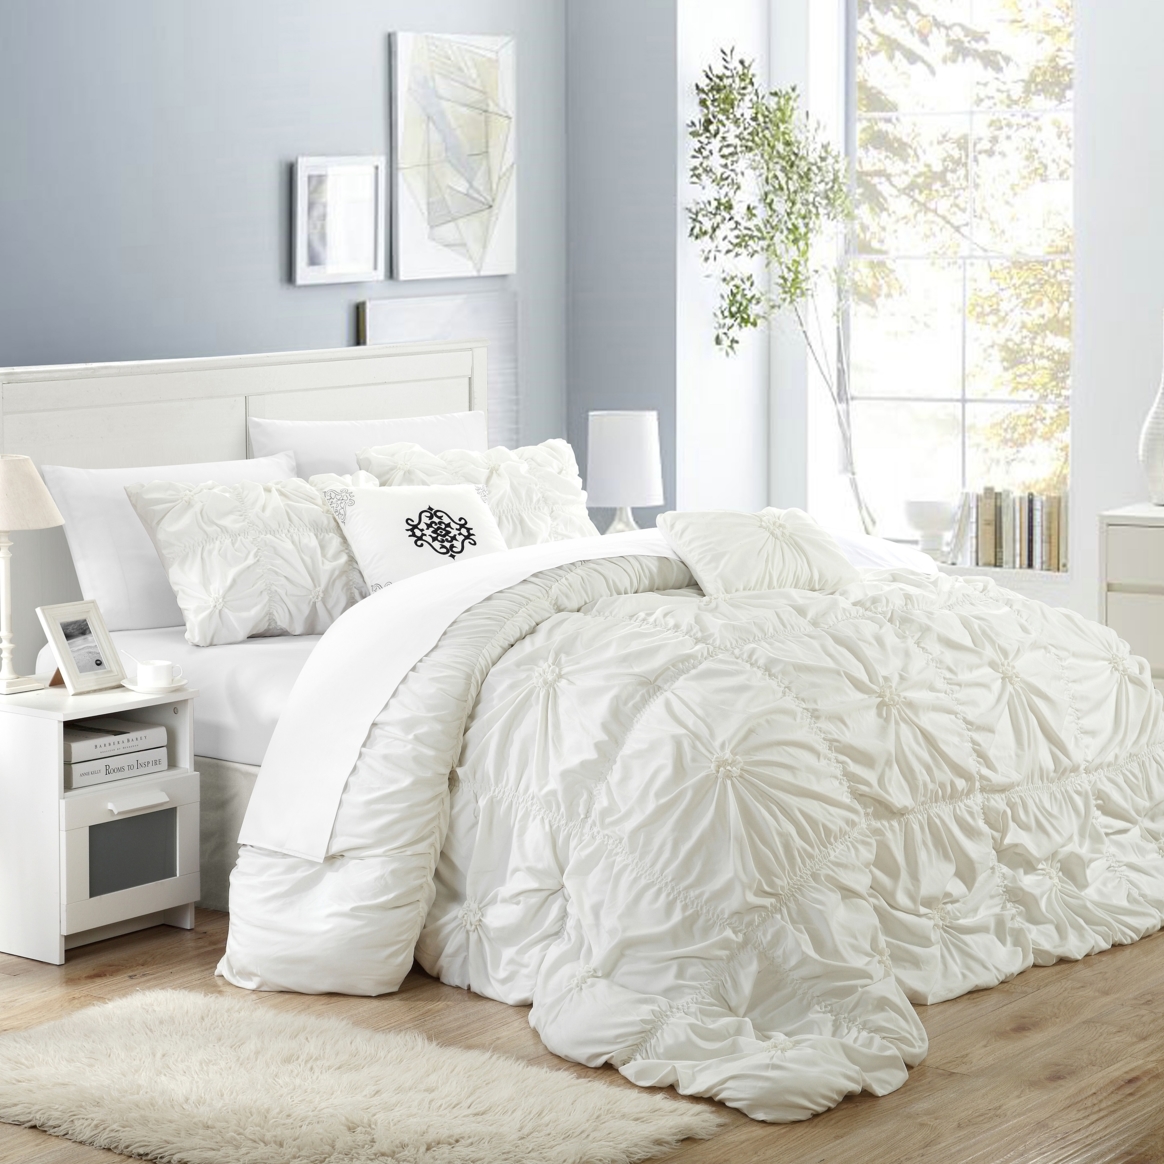 Hilton 10 Piece Comforter Set Floral Pinch Pleated Ruffled Designer Embellished Bed In A Bag Bedding - White, King